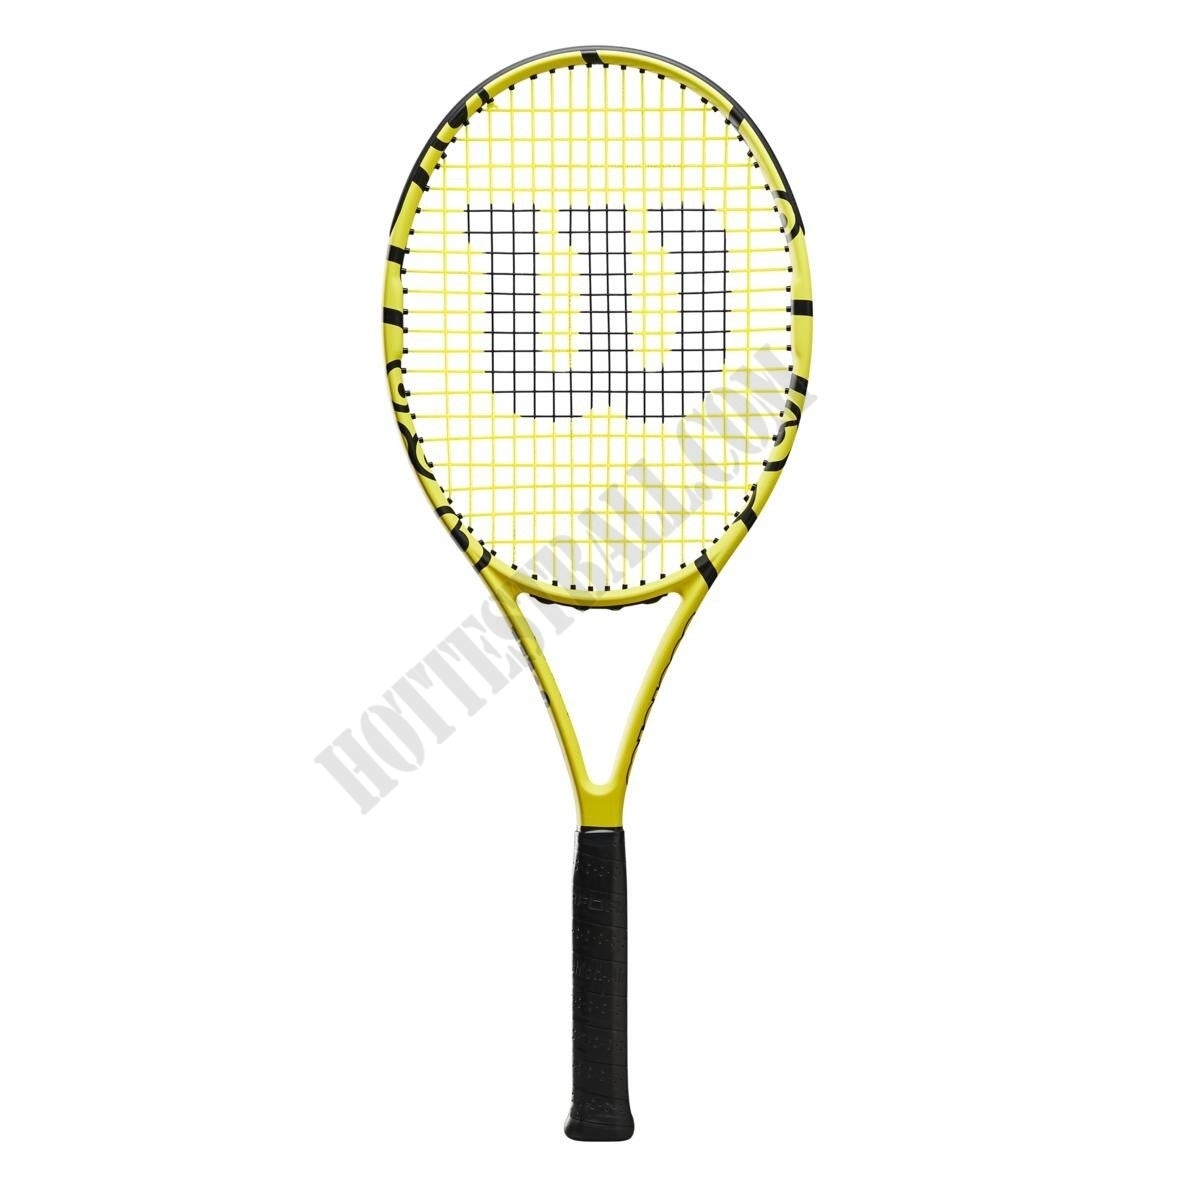 Minions 103 Tennis Racket - Wilson Discount Store - Minions 103 Tennis Racket - Wilson Discount Store